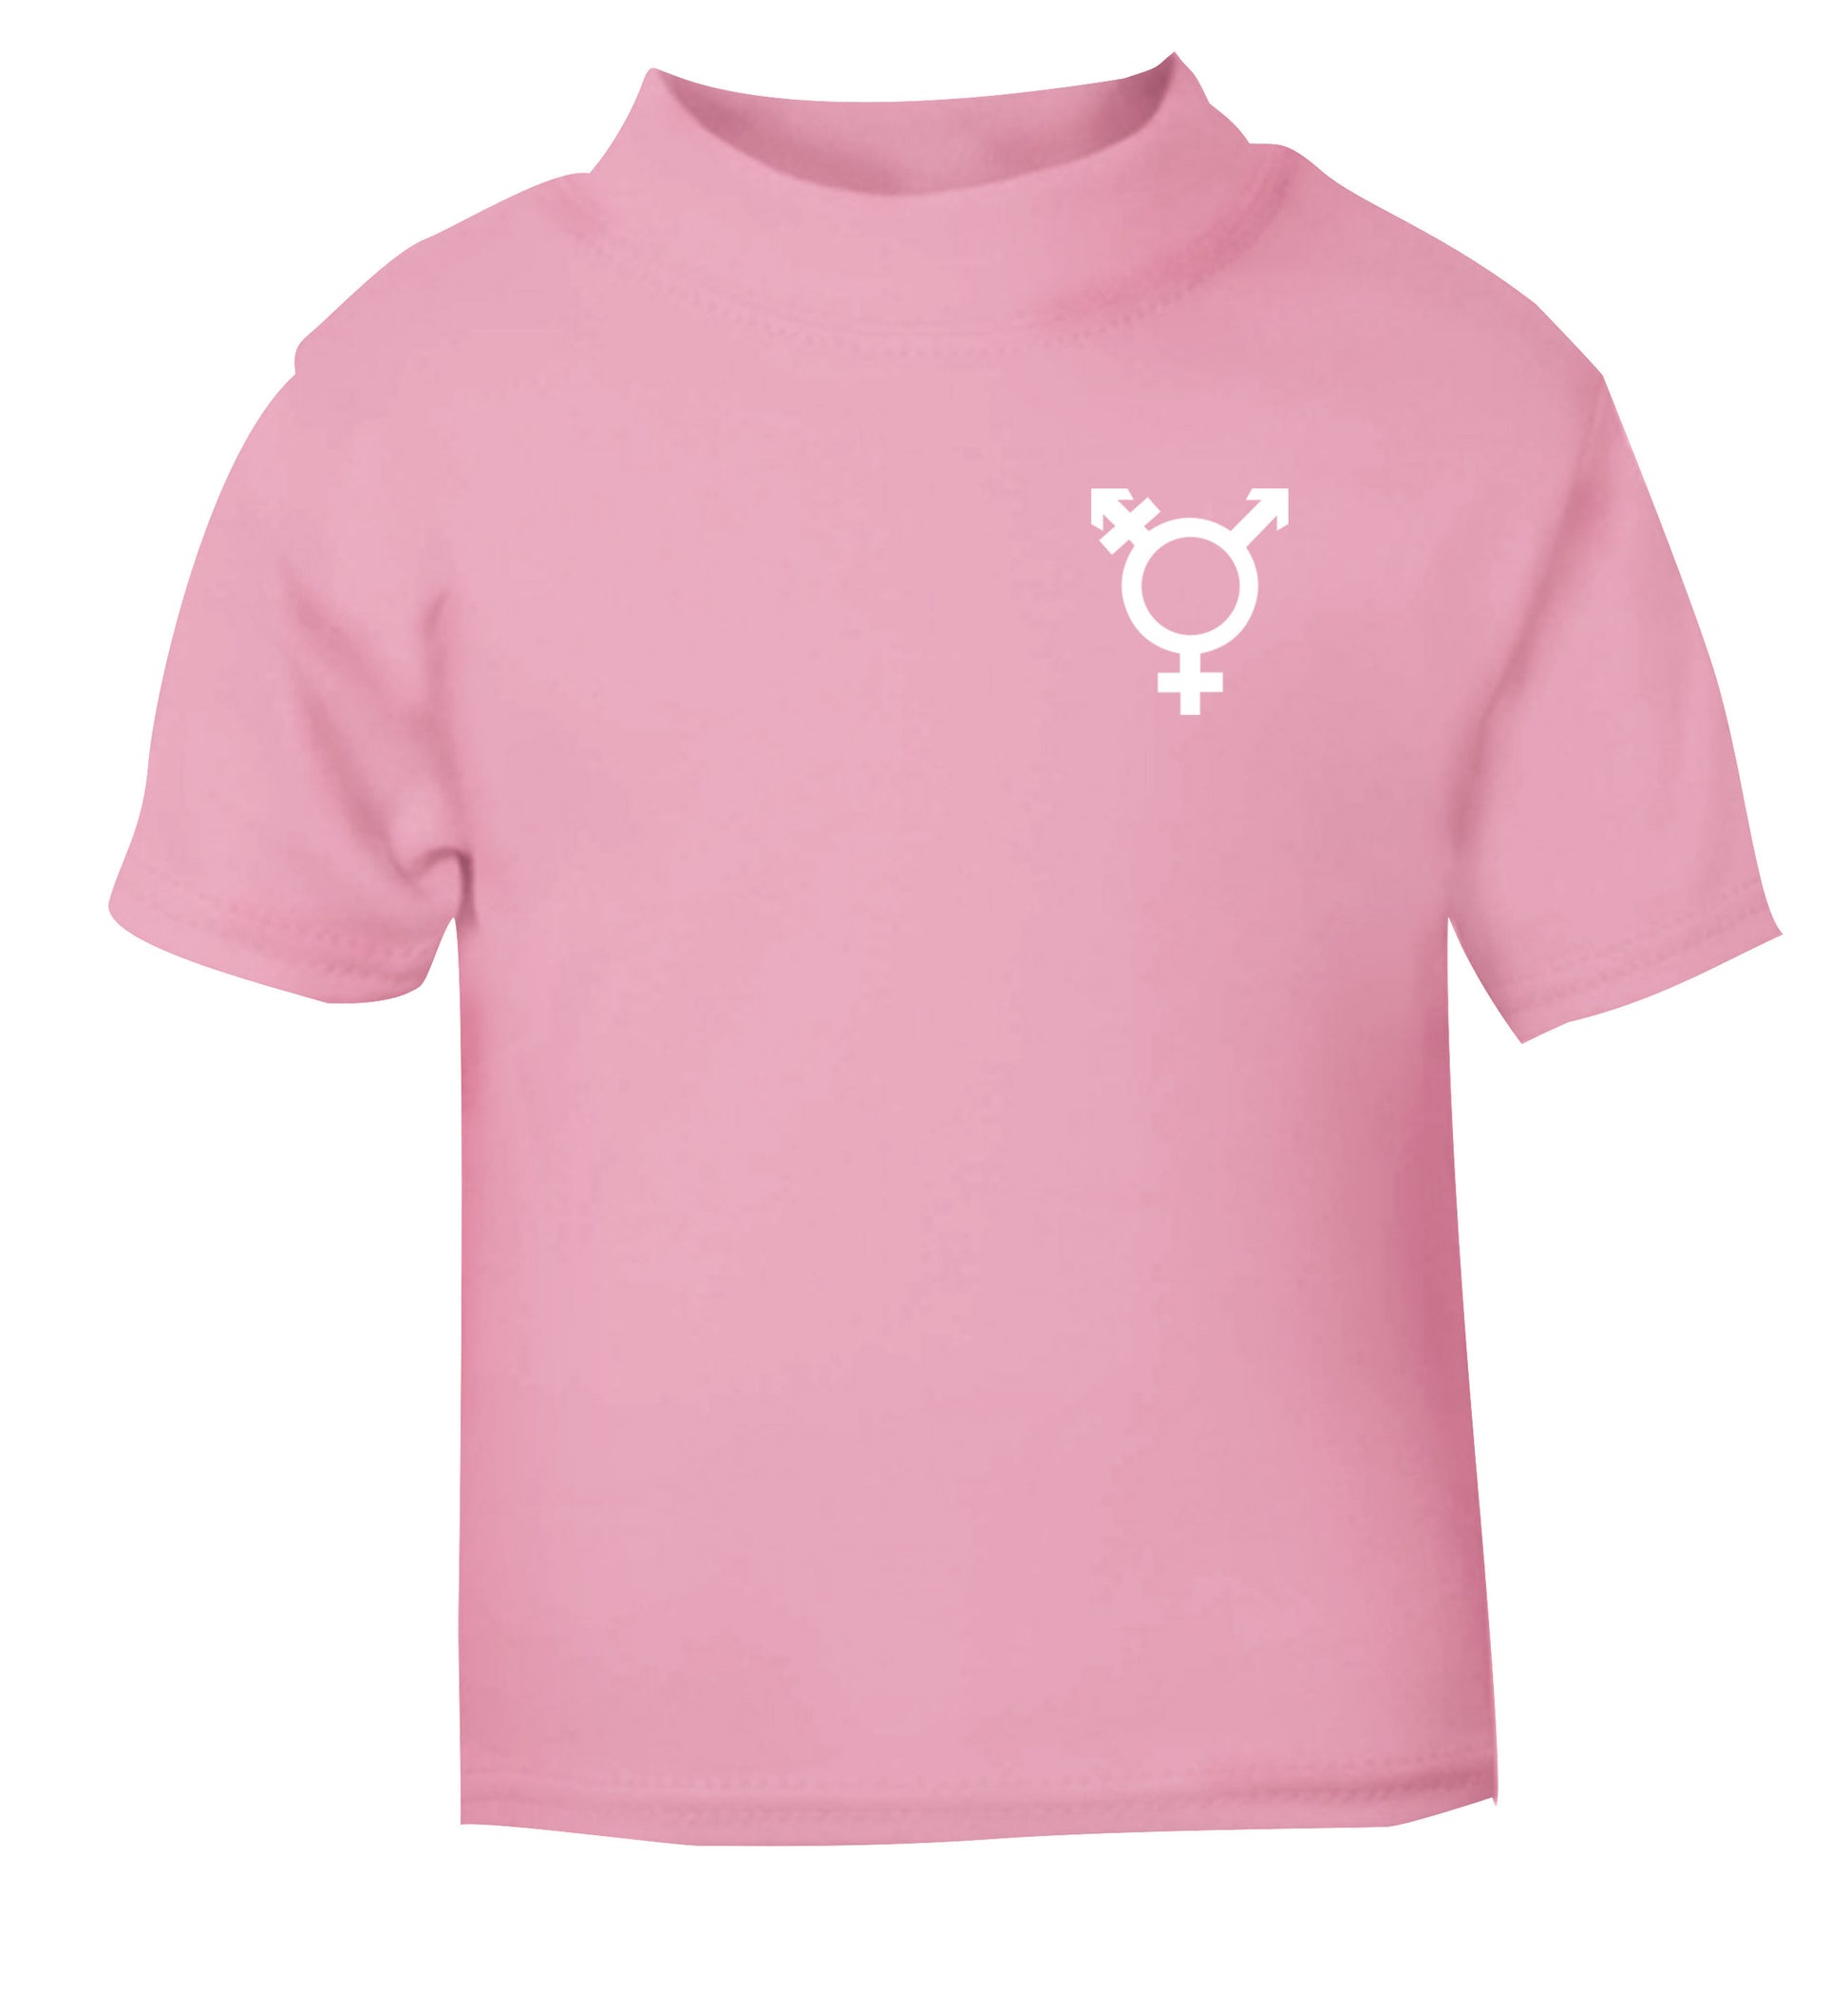 Trans gender symbol pocket light pink Baby Toddler Tshirt 2 Years